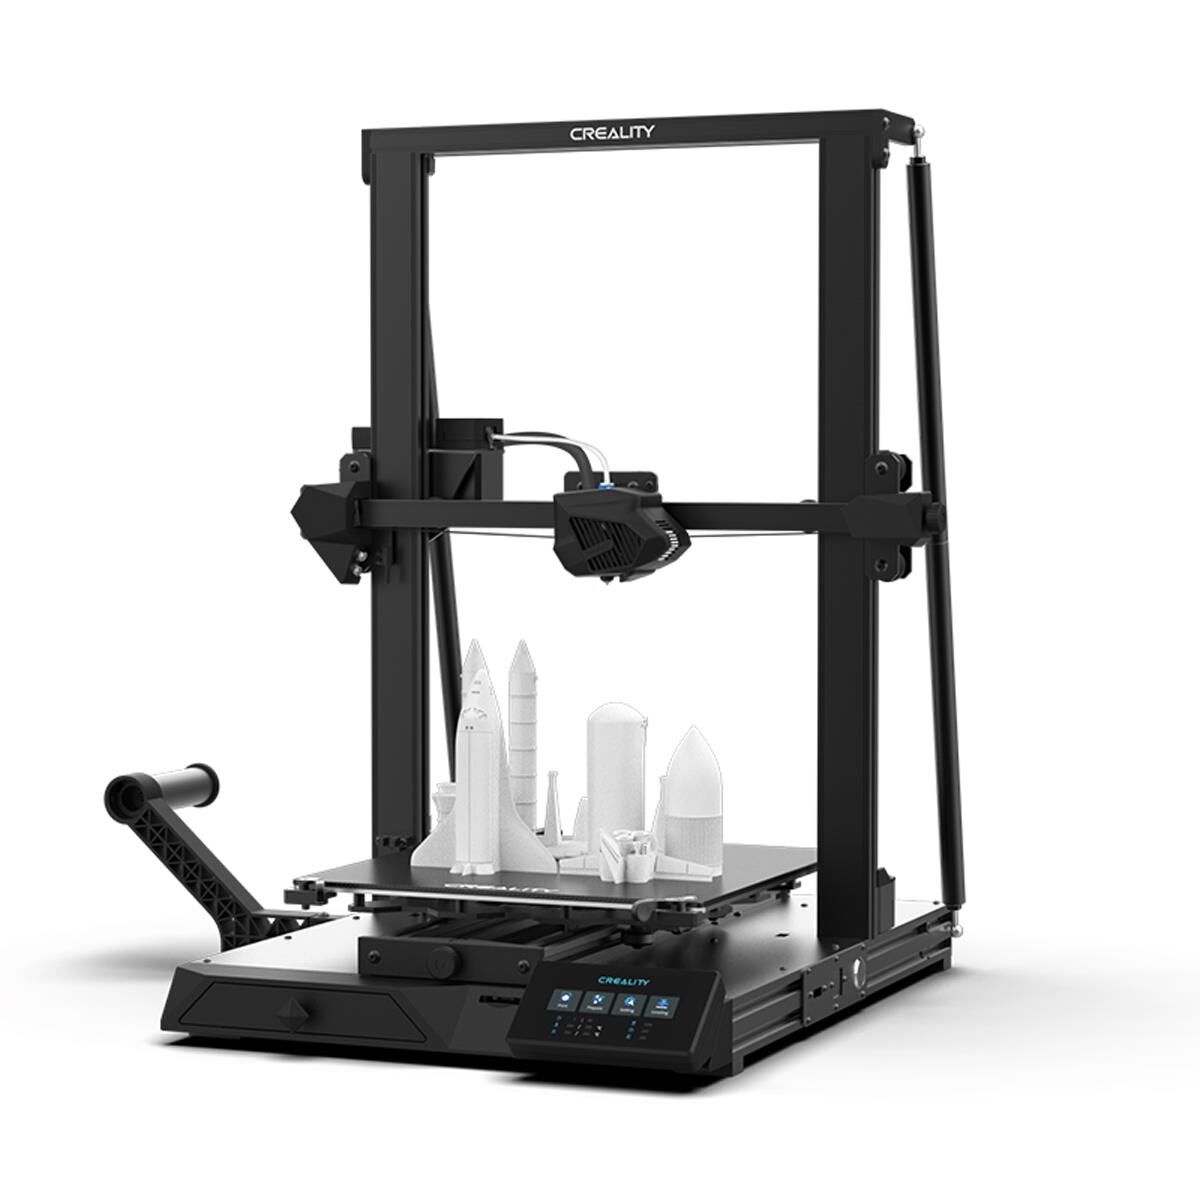 ChromaCast Creality CR-10 Smart Wi-Fi Fast Printing 3D Printer